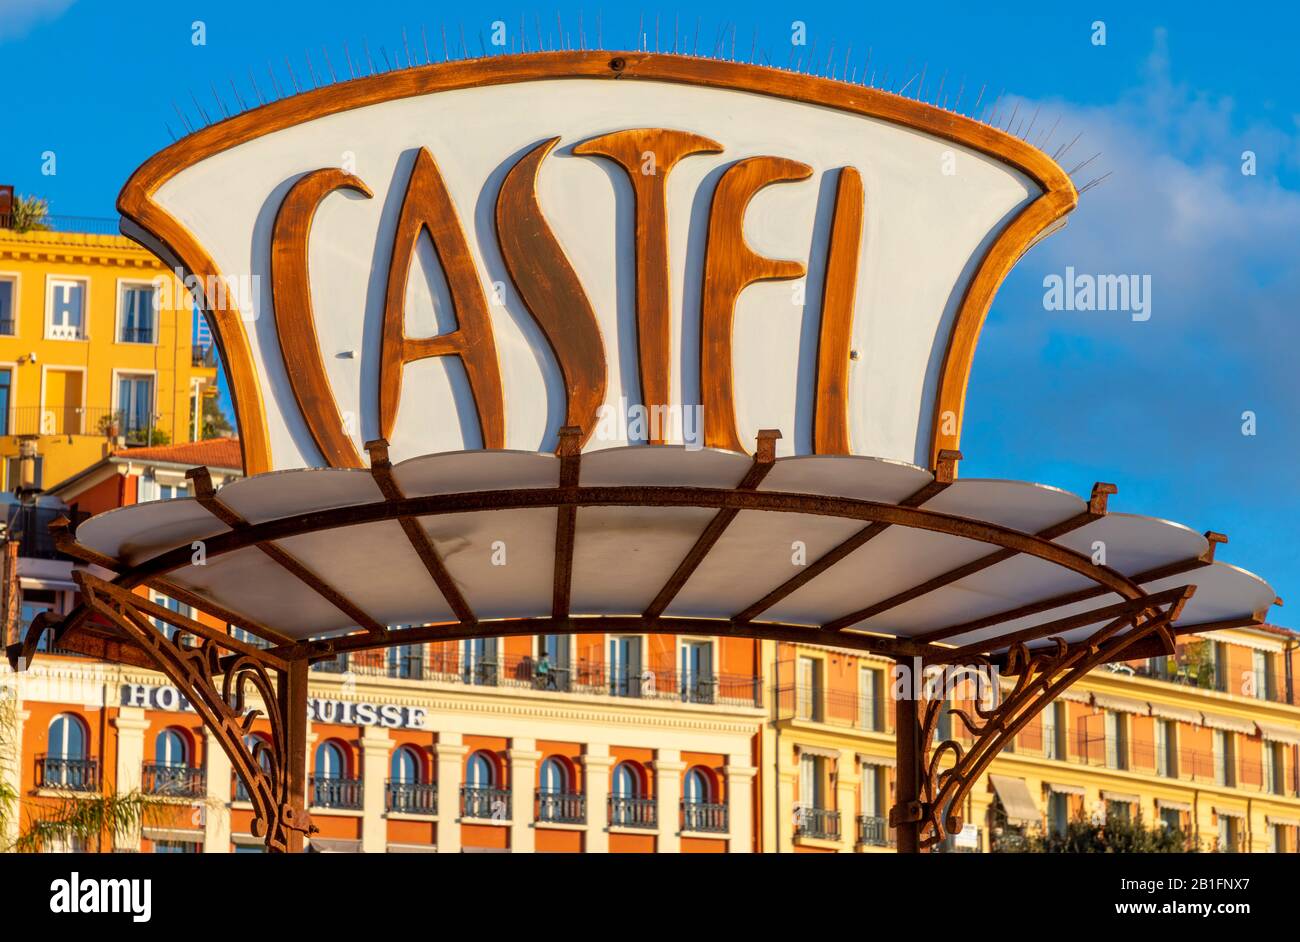 Castel Beach Signage, Nice, South of France, Stock Photo